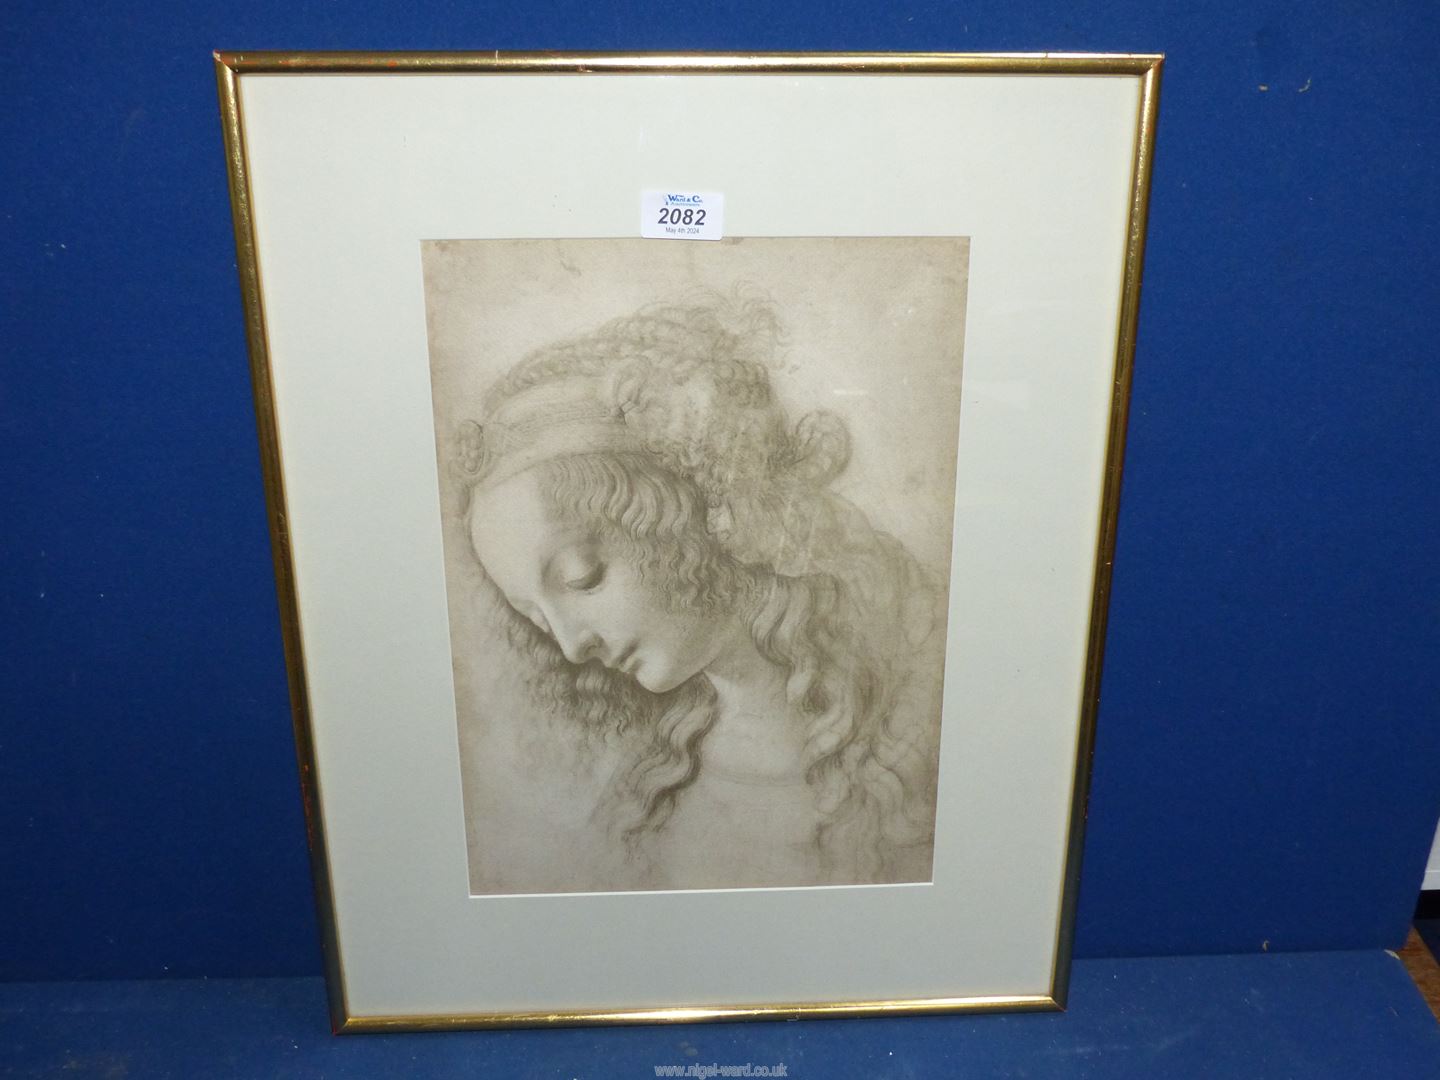 A framed and mounted Da Vinci Print 'Study of Mary Magdalene'.